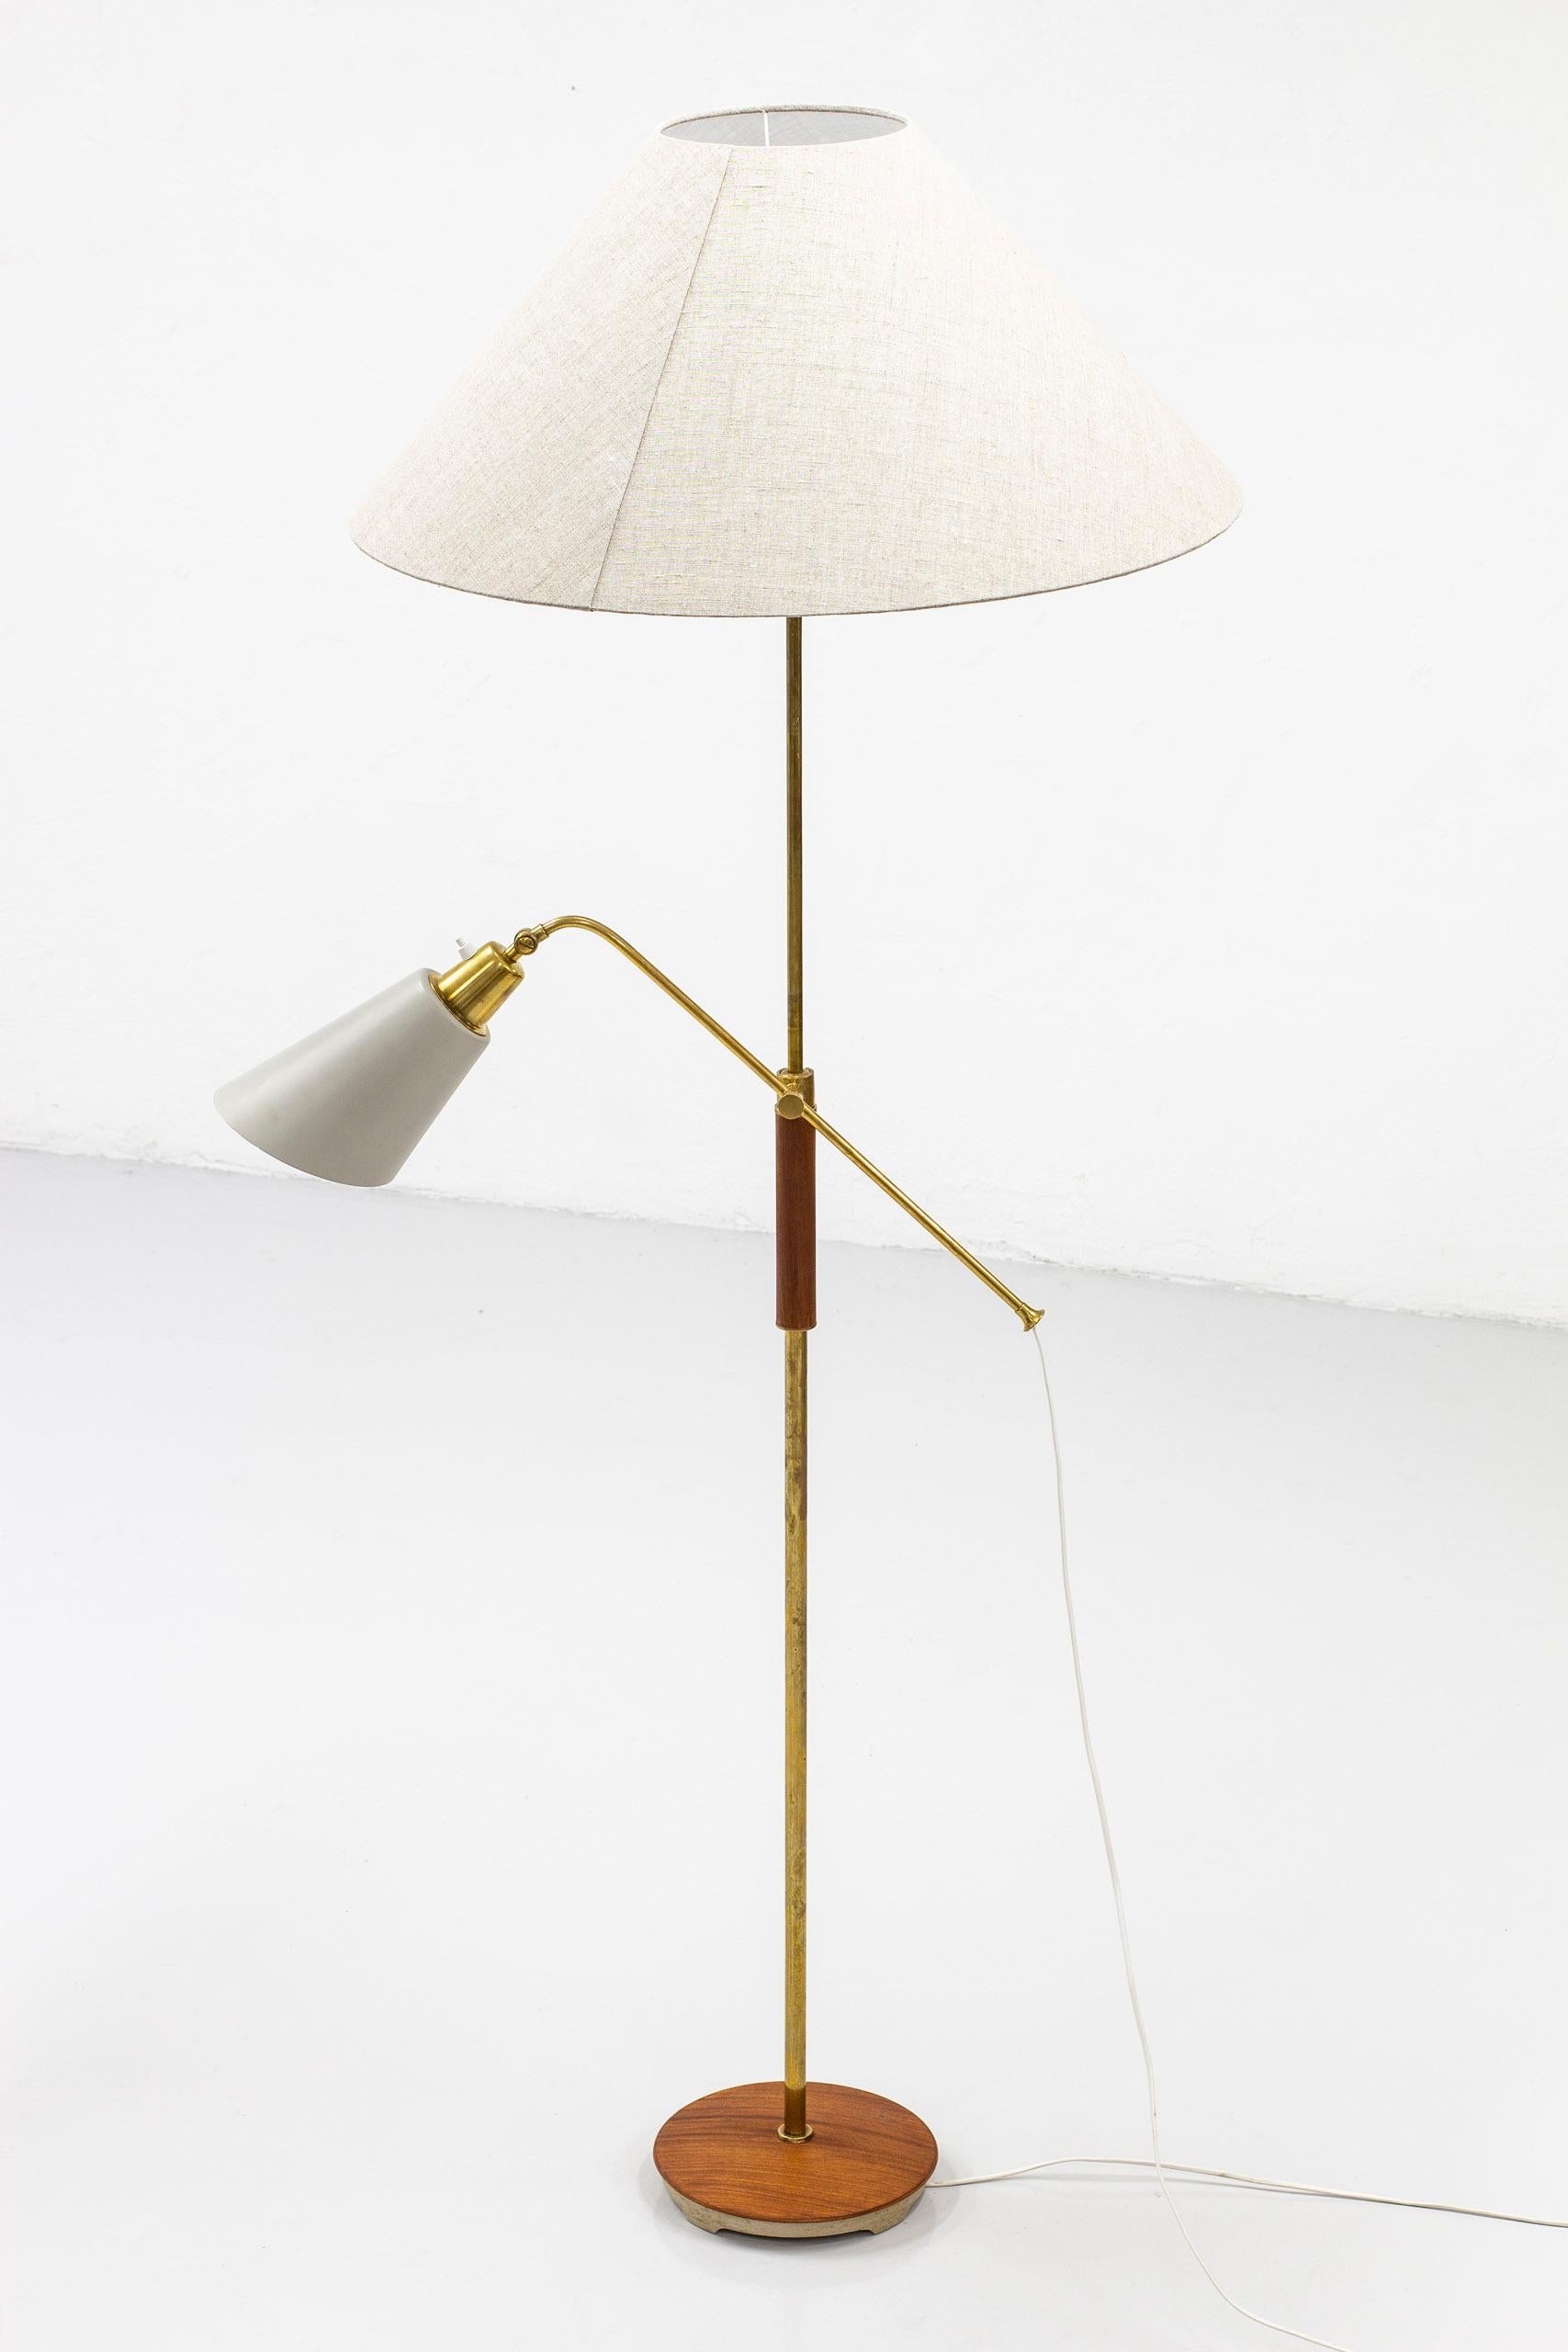 Scandinavian Modern Pair of Floor Lamps by Bertil Brisborg, Nordiska Kompaniet, Sweden, 1952